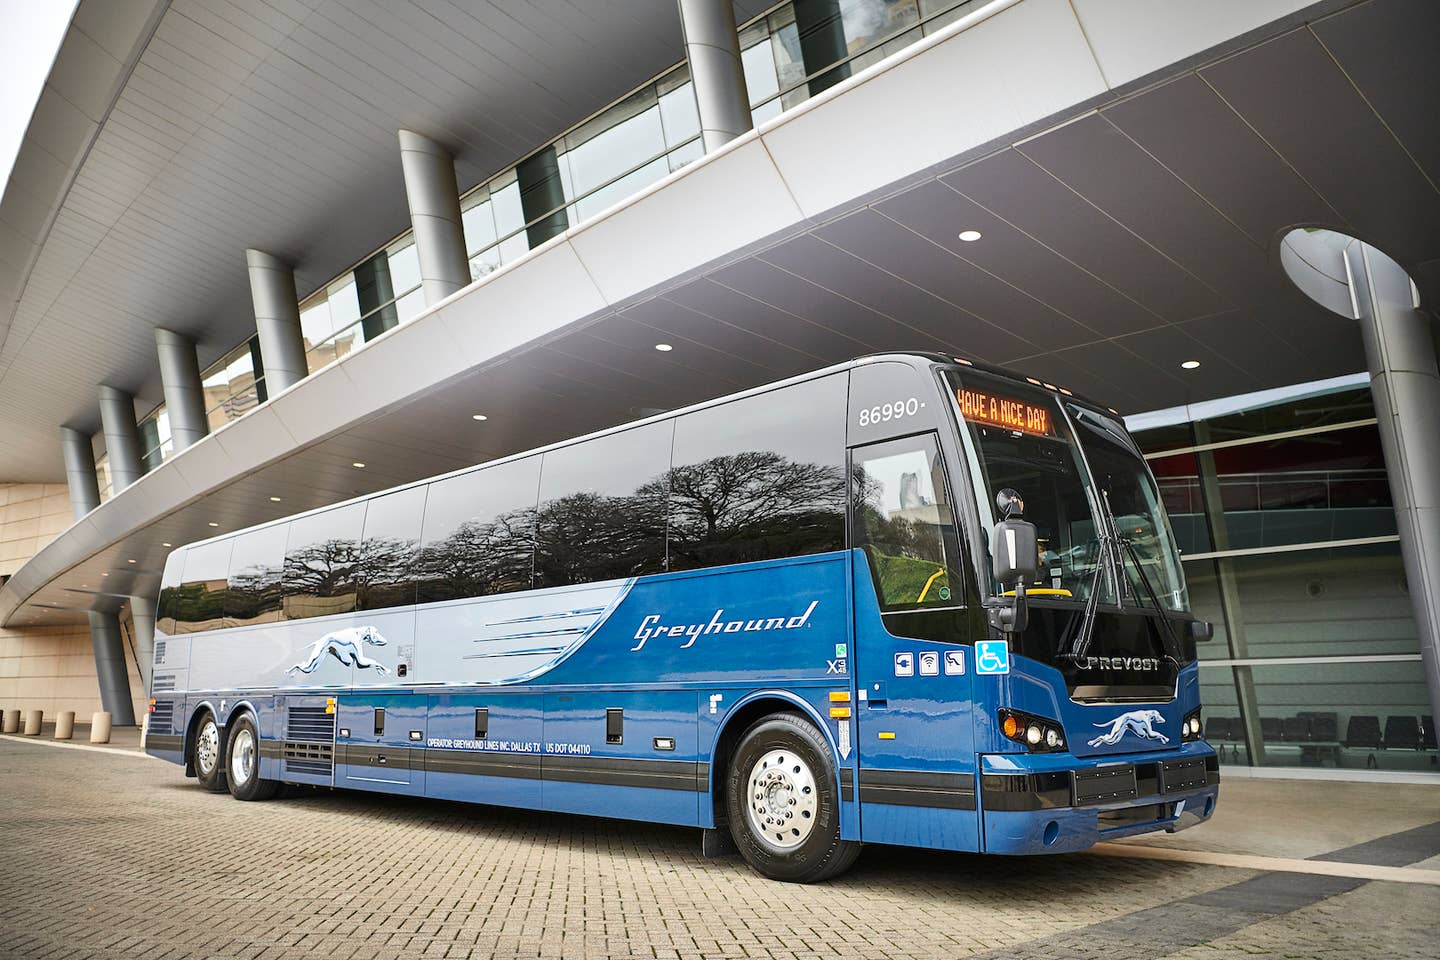 A Greyhound coach bus at a modern terminal